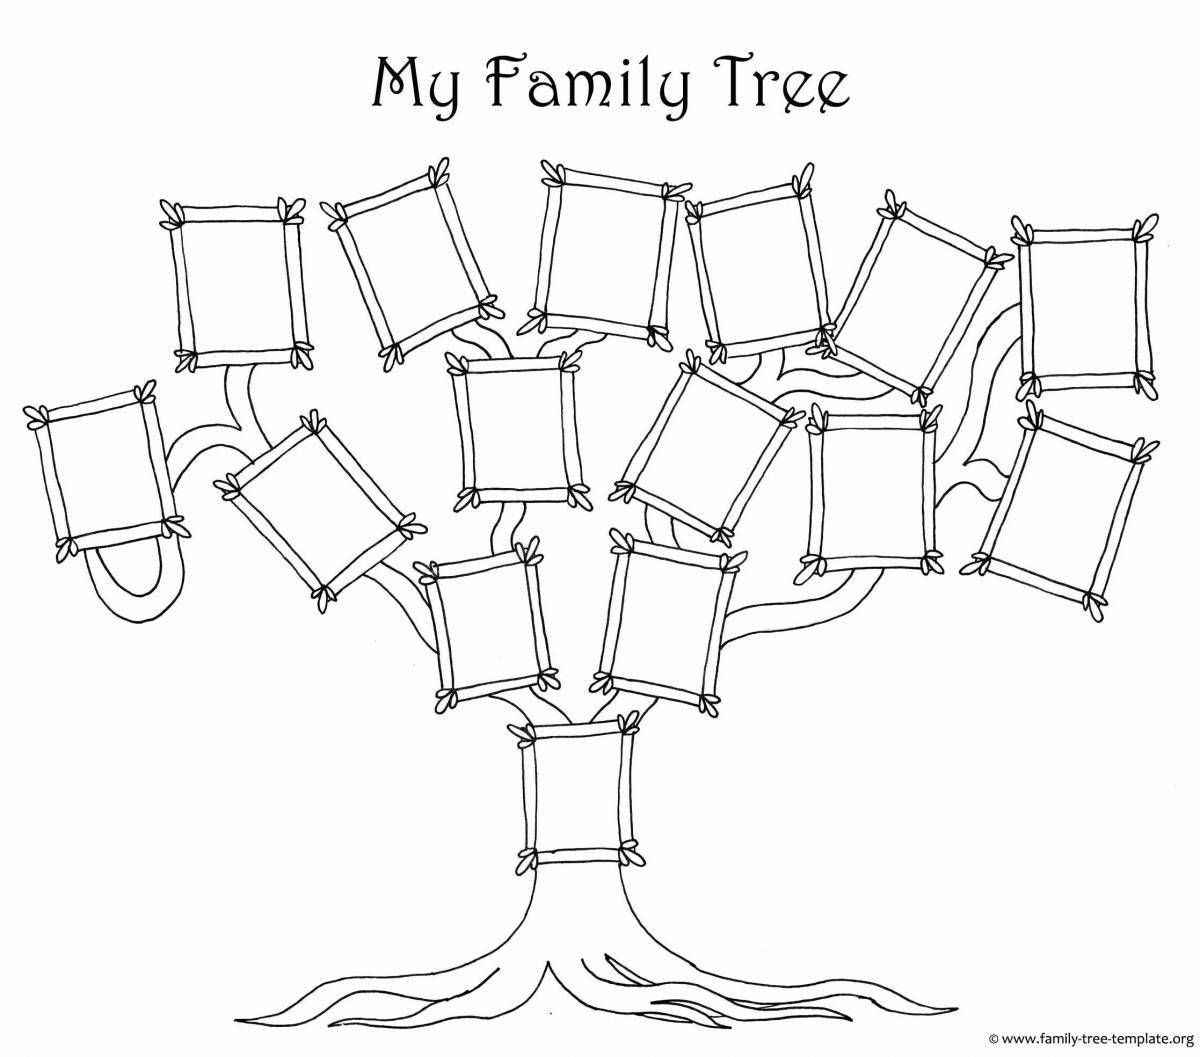 Intricate family tree illustration